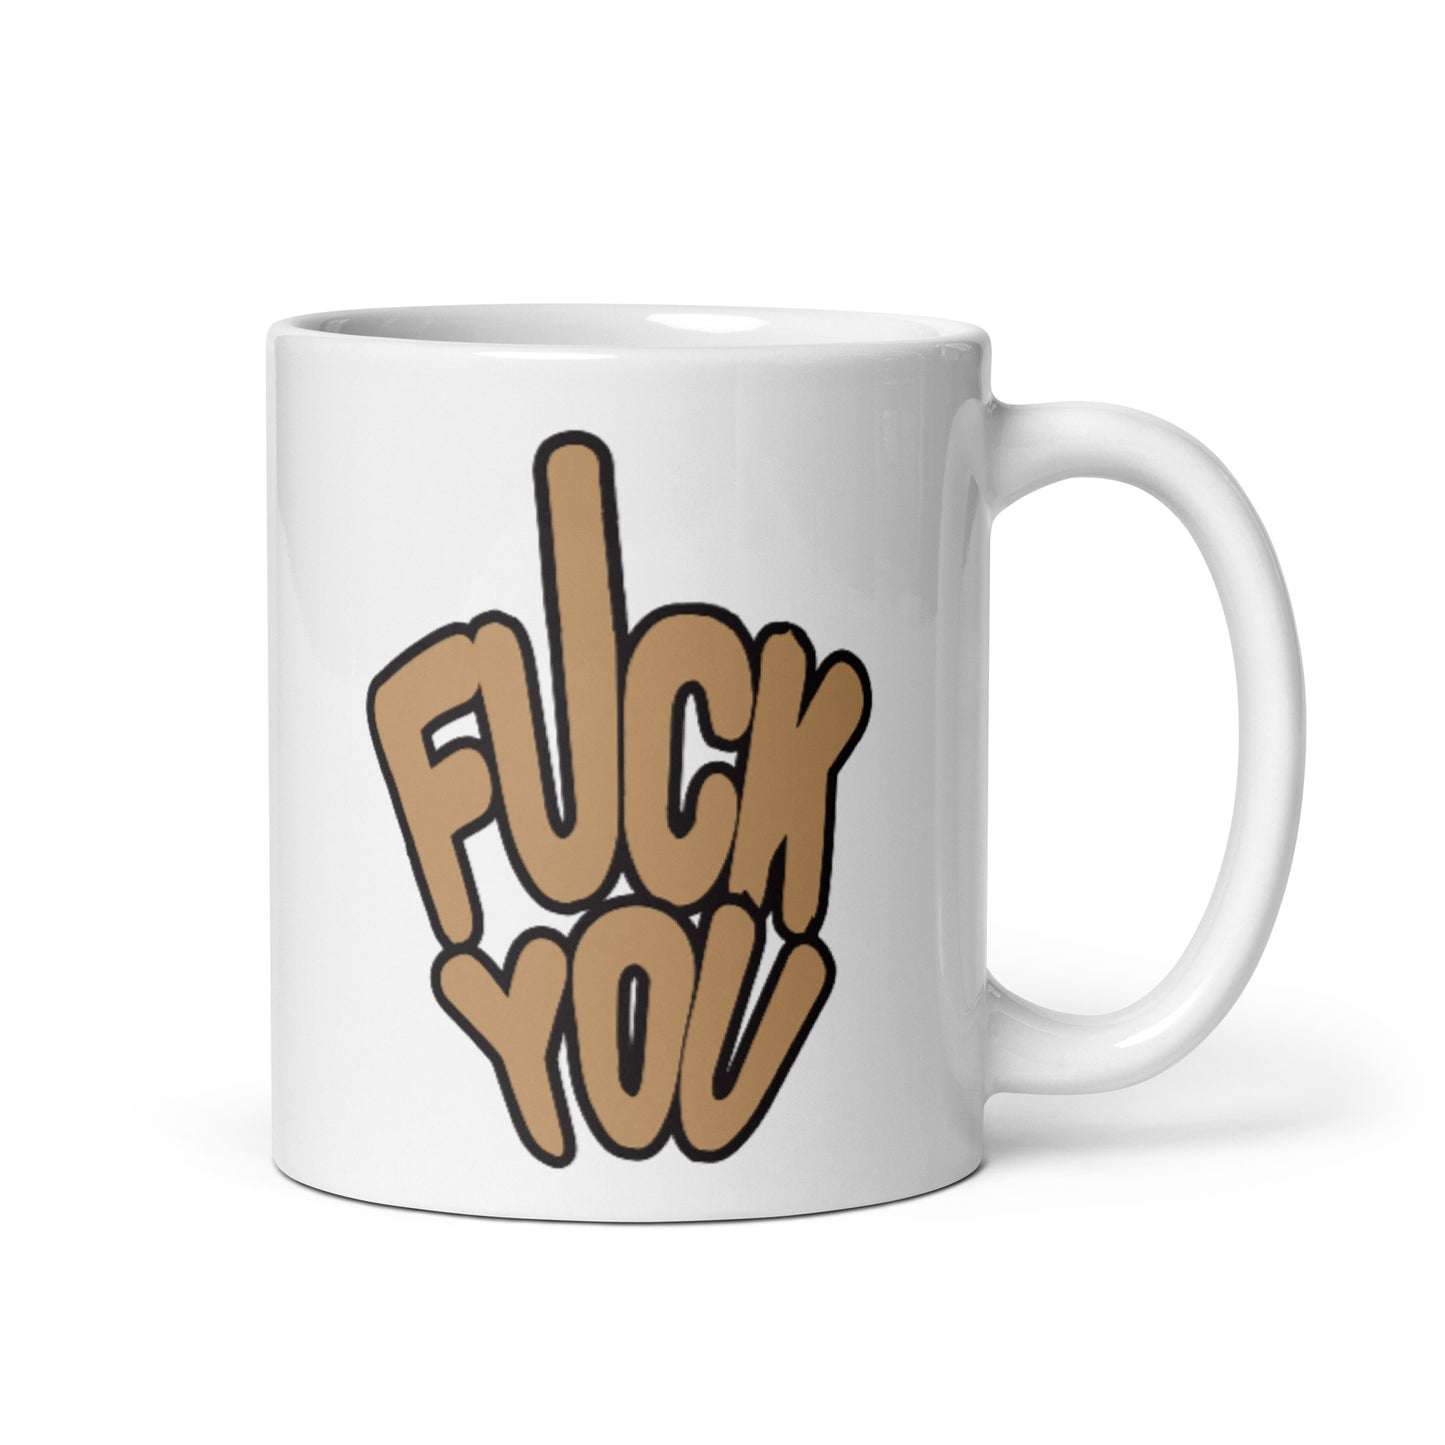 Fuck You - White glossy mug